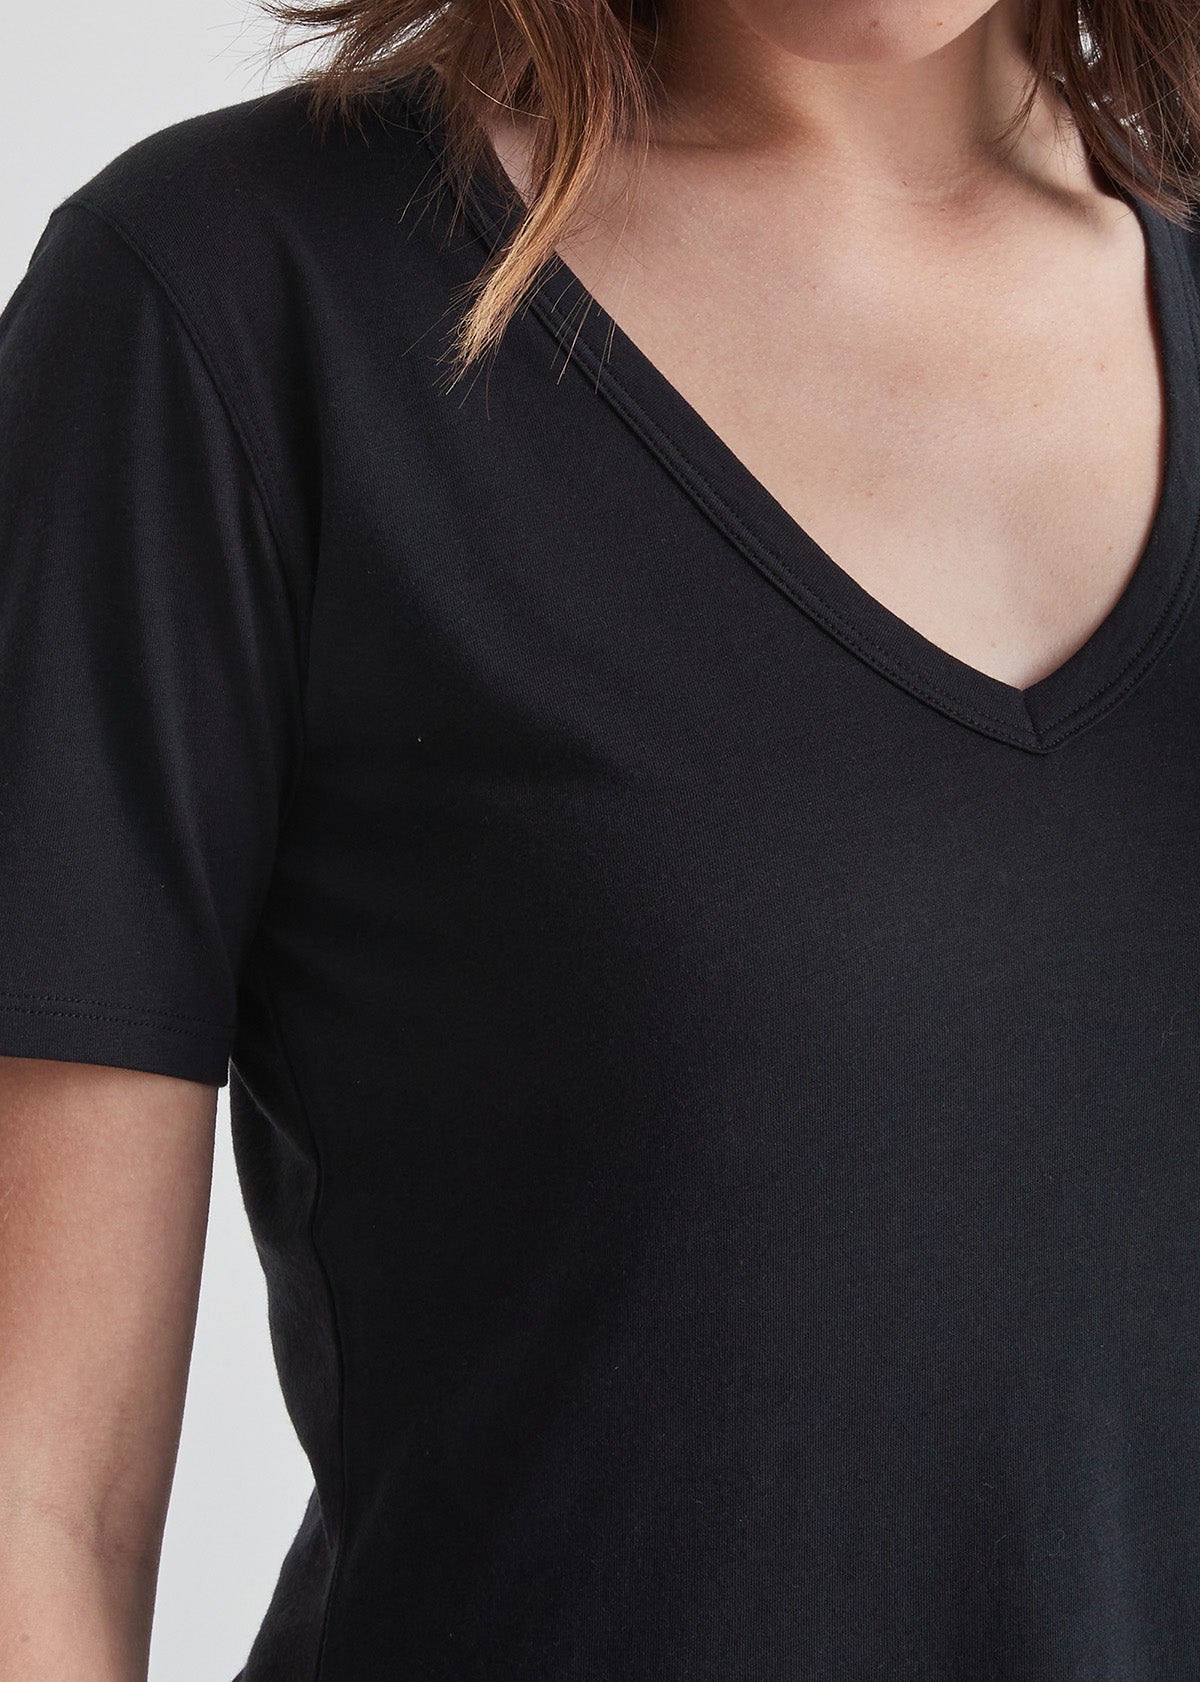 Women's Soft Lightweight Black V-Neck T-Shirt Neckline Detail